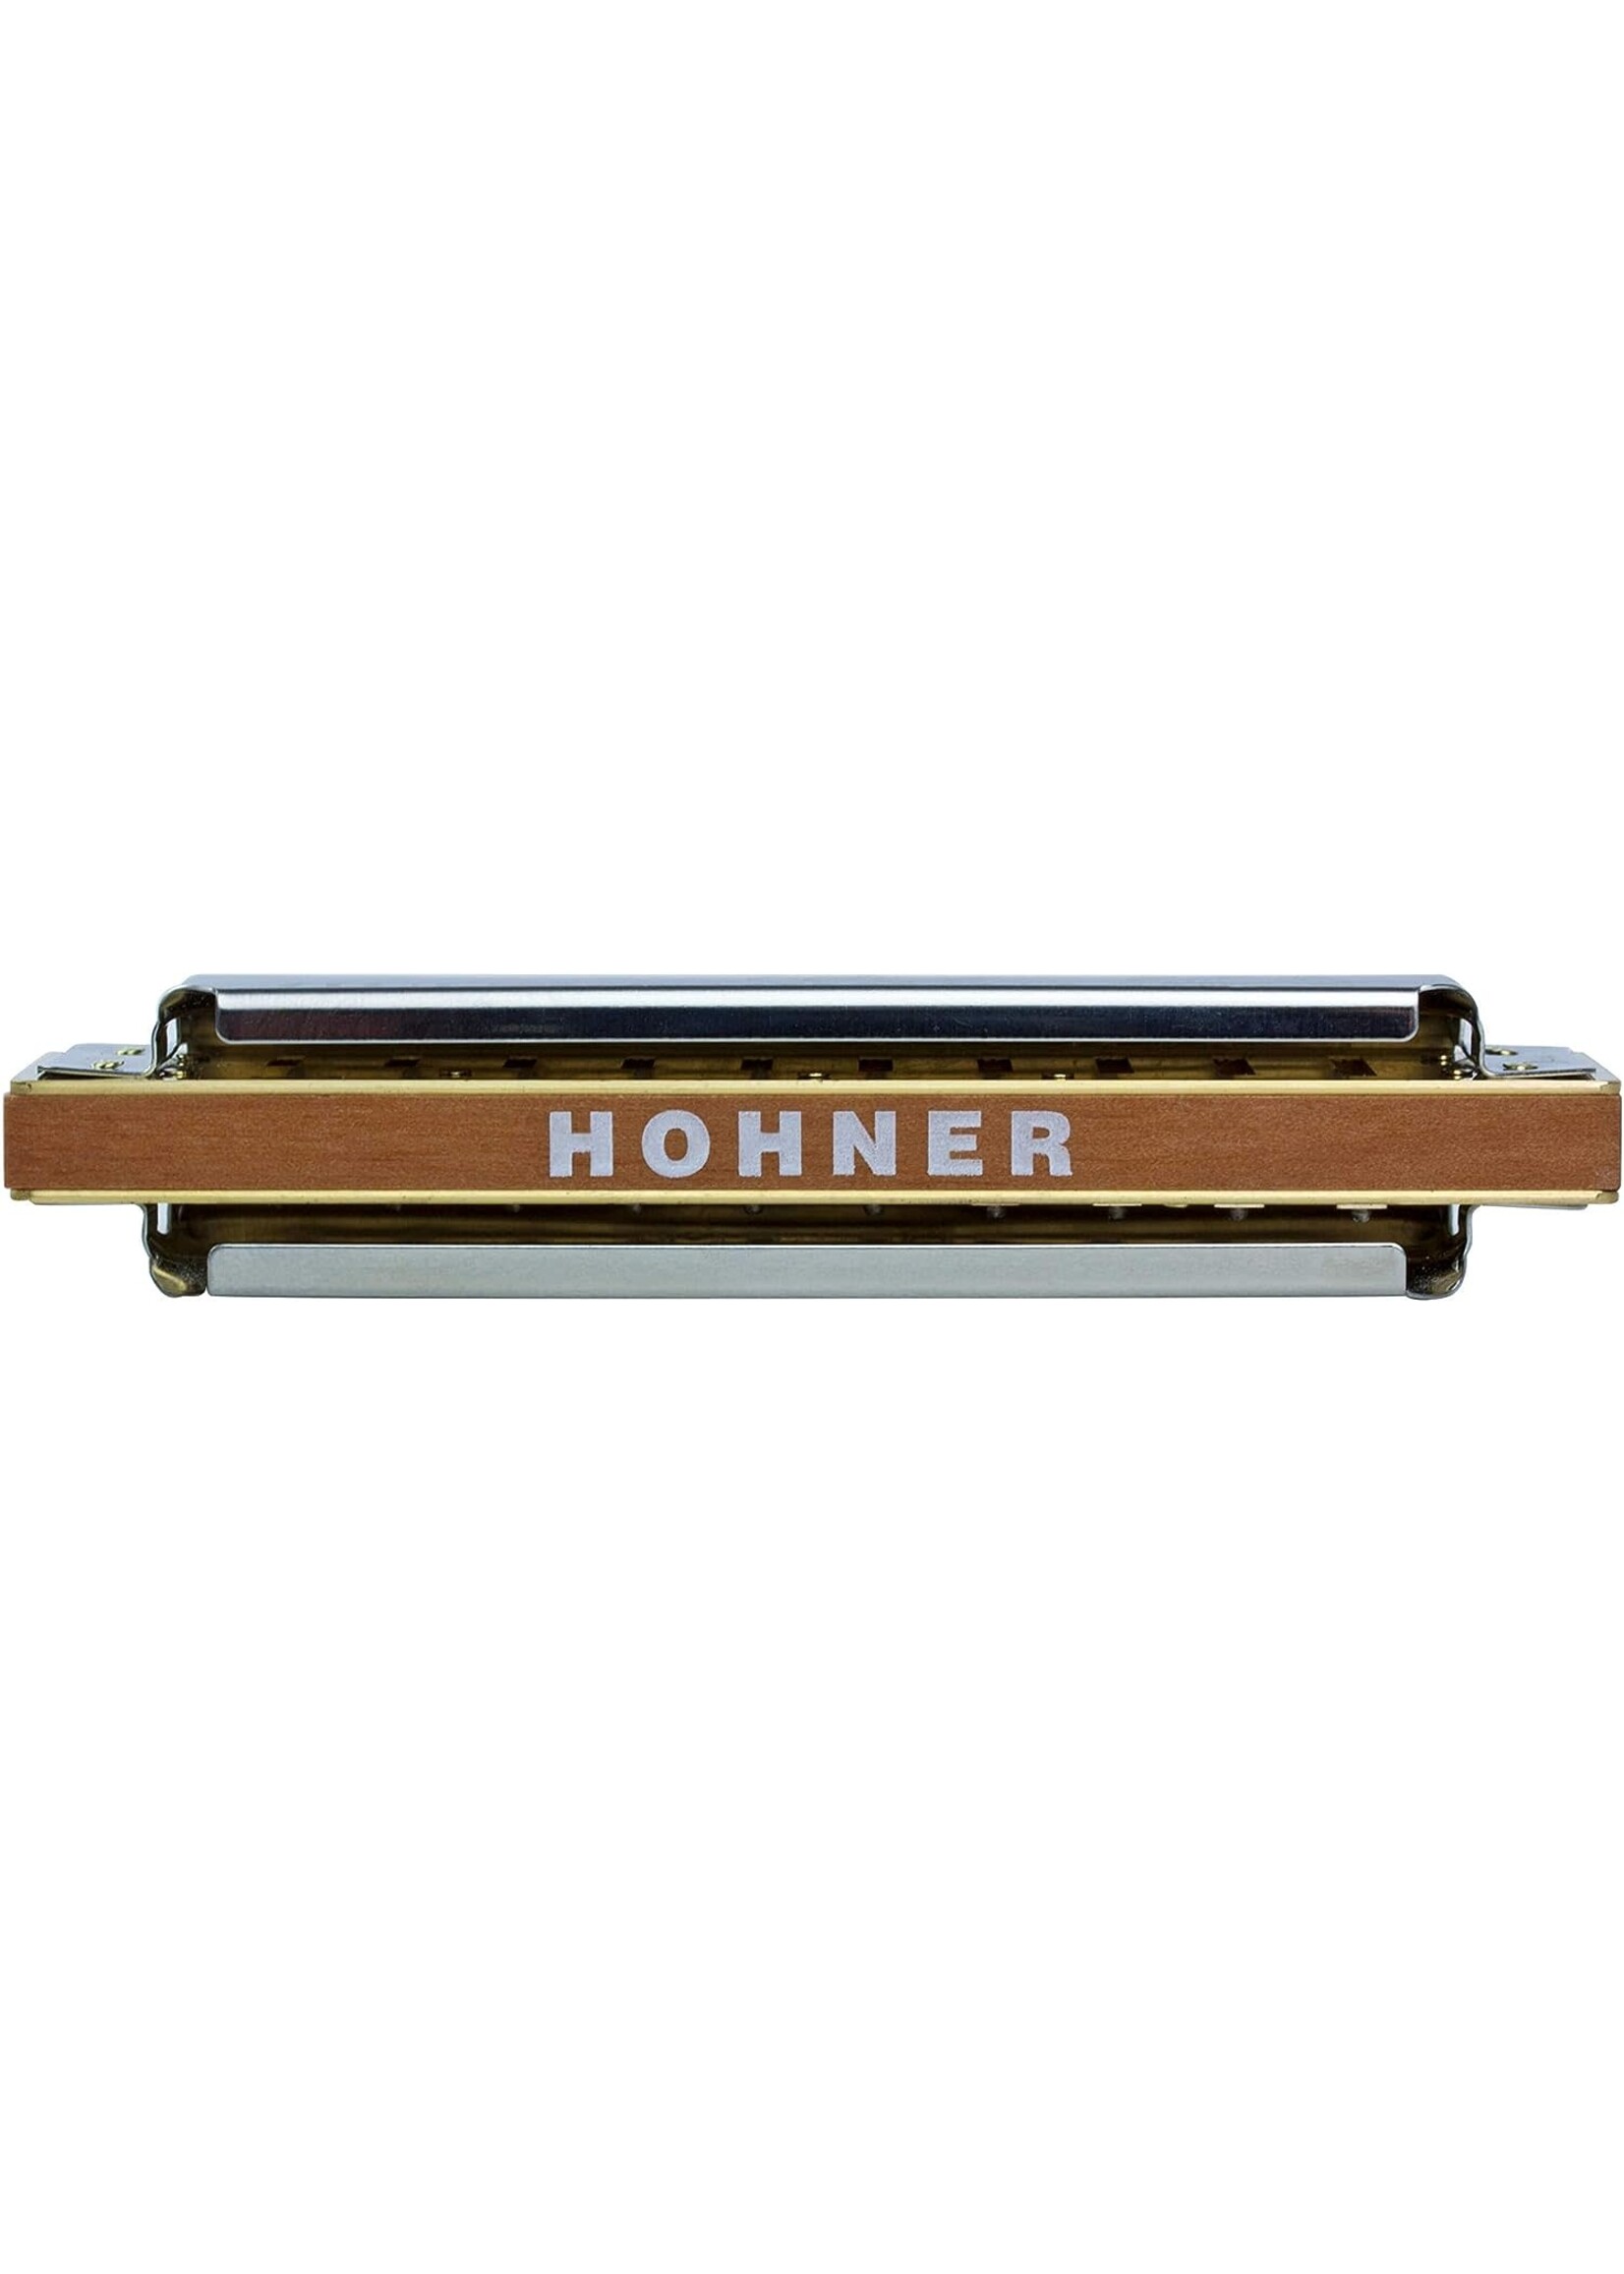 Hohner Hohner 1896BX-F# Marine Band Harmonica - Key of F#